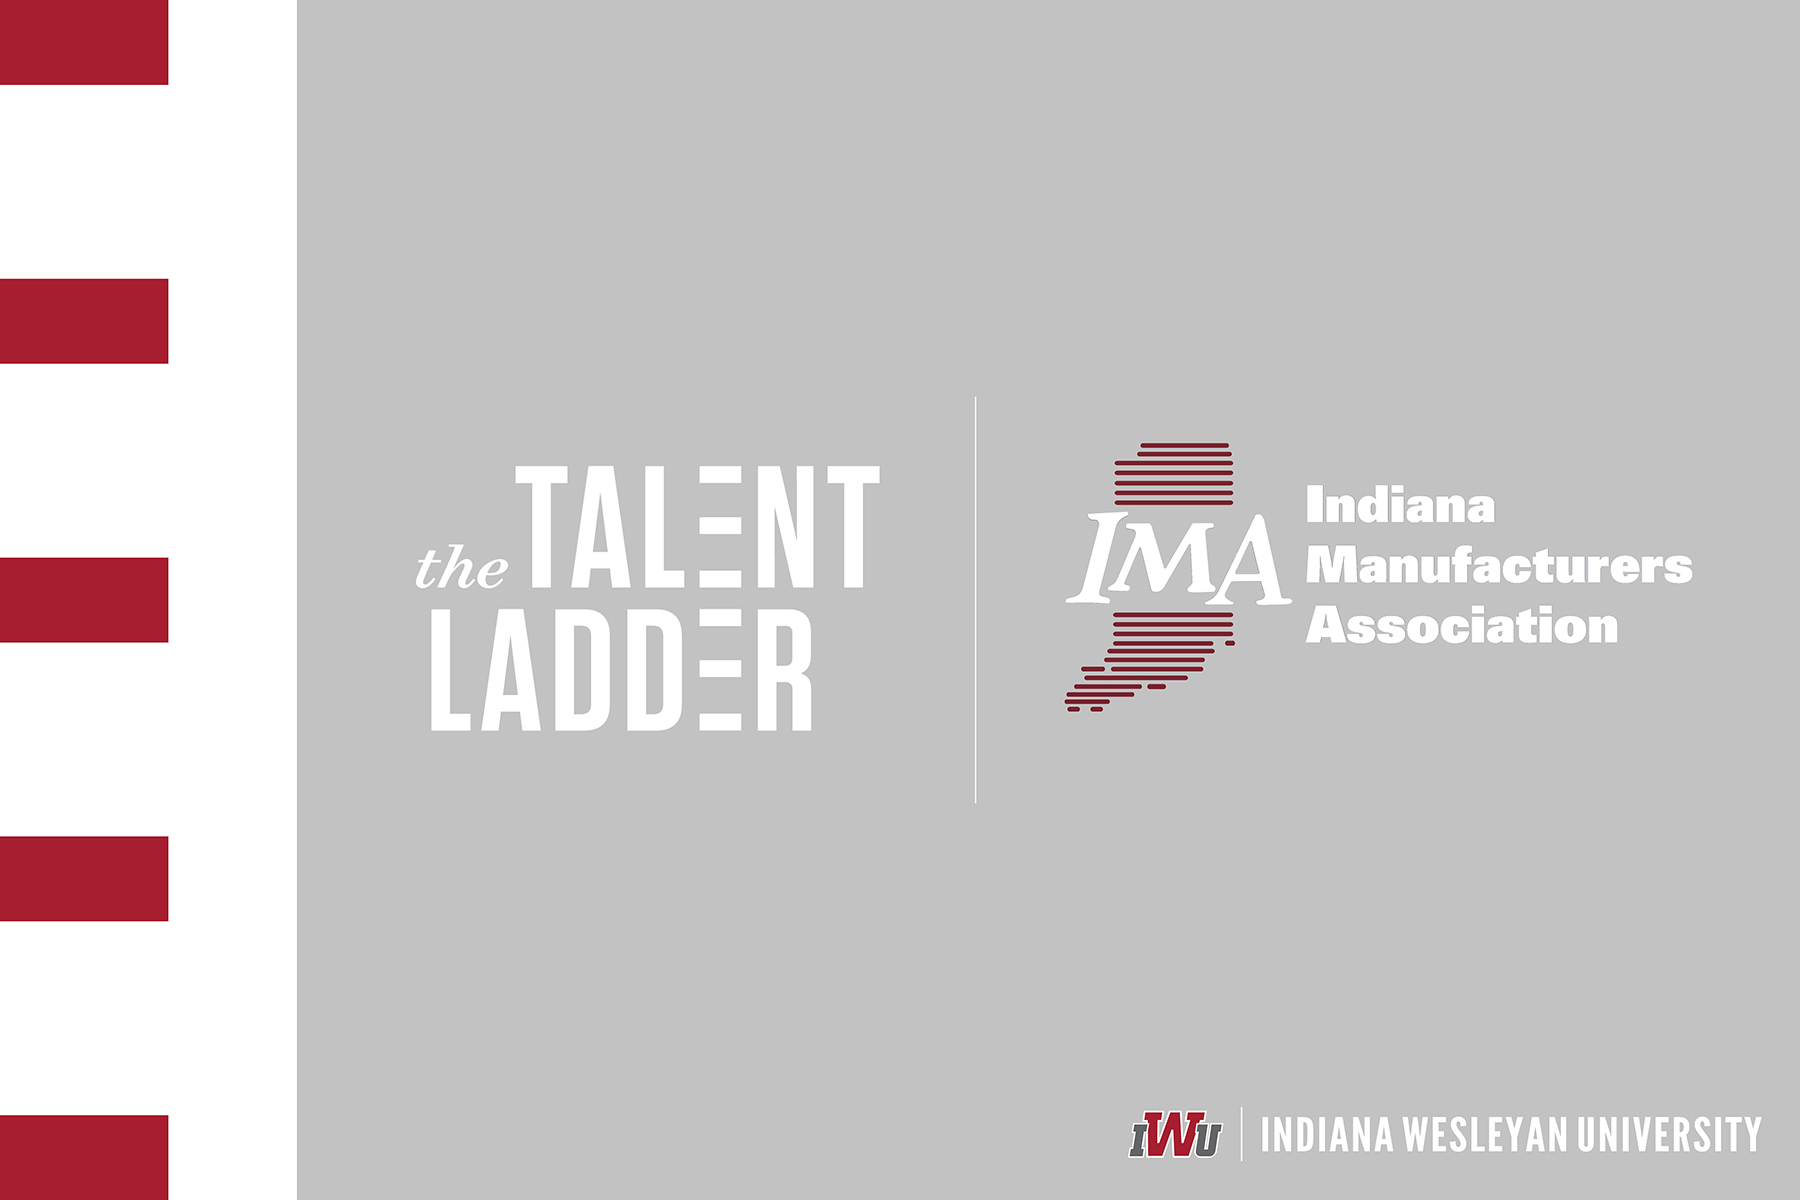 IWU partners with Indiana Manufacturers Association